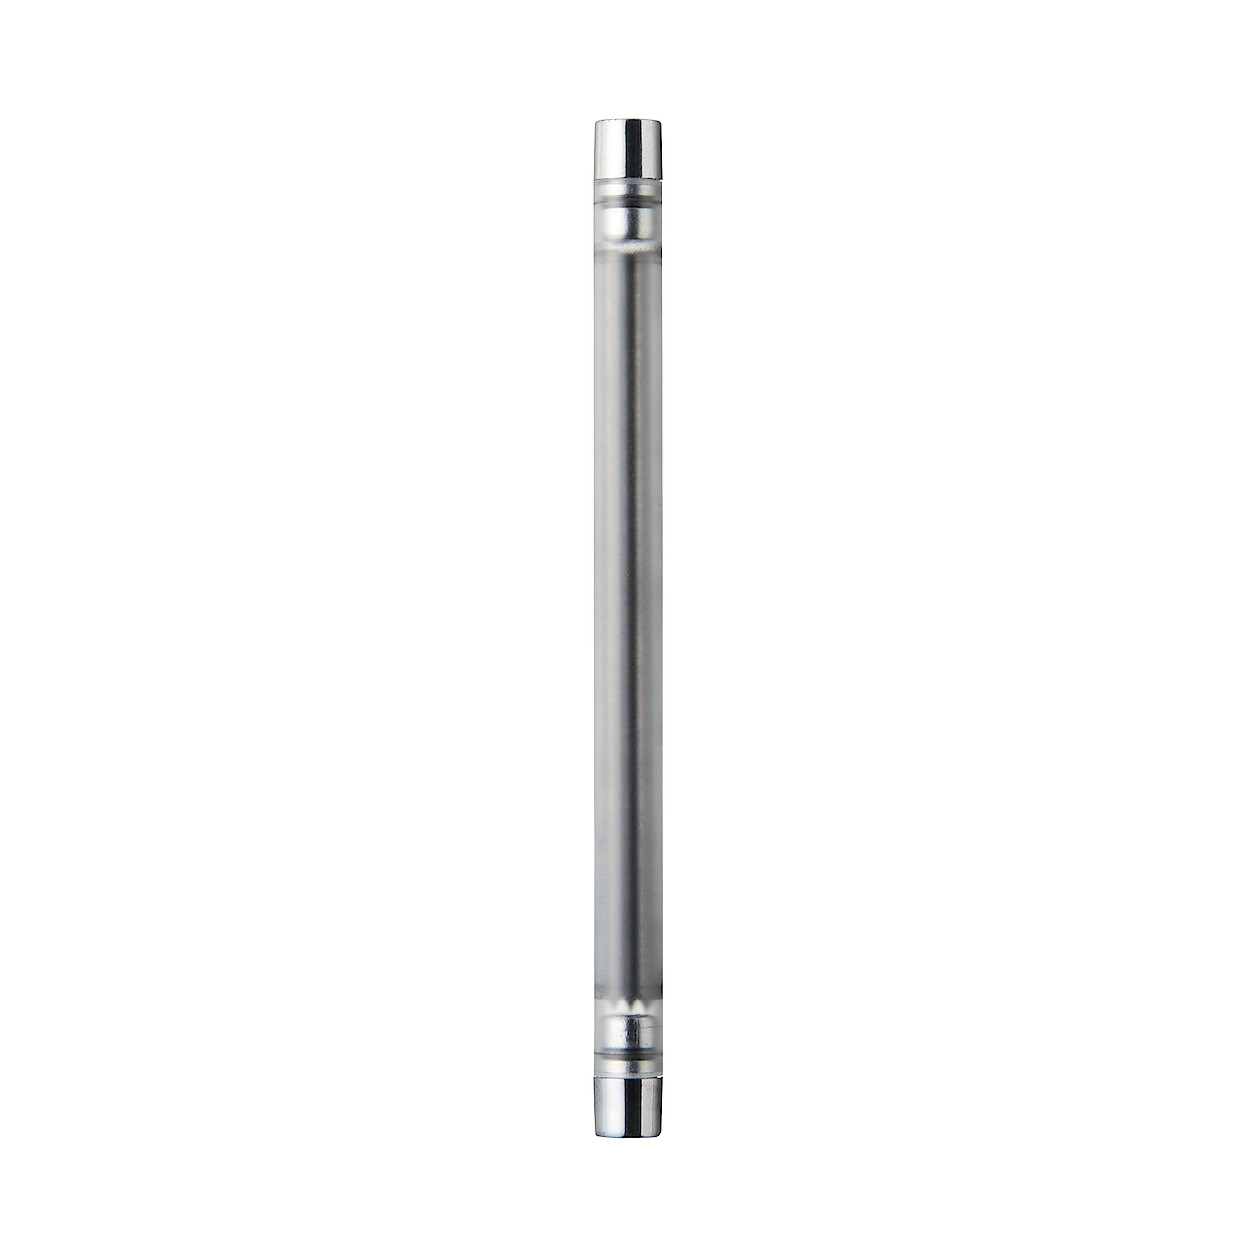 4 Holes Sharpener Multi-functional Pencil Sharpener With Lid For